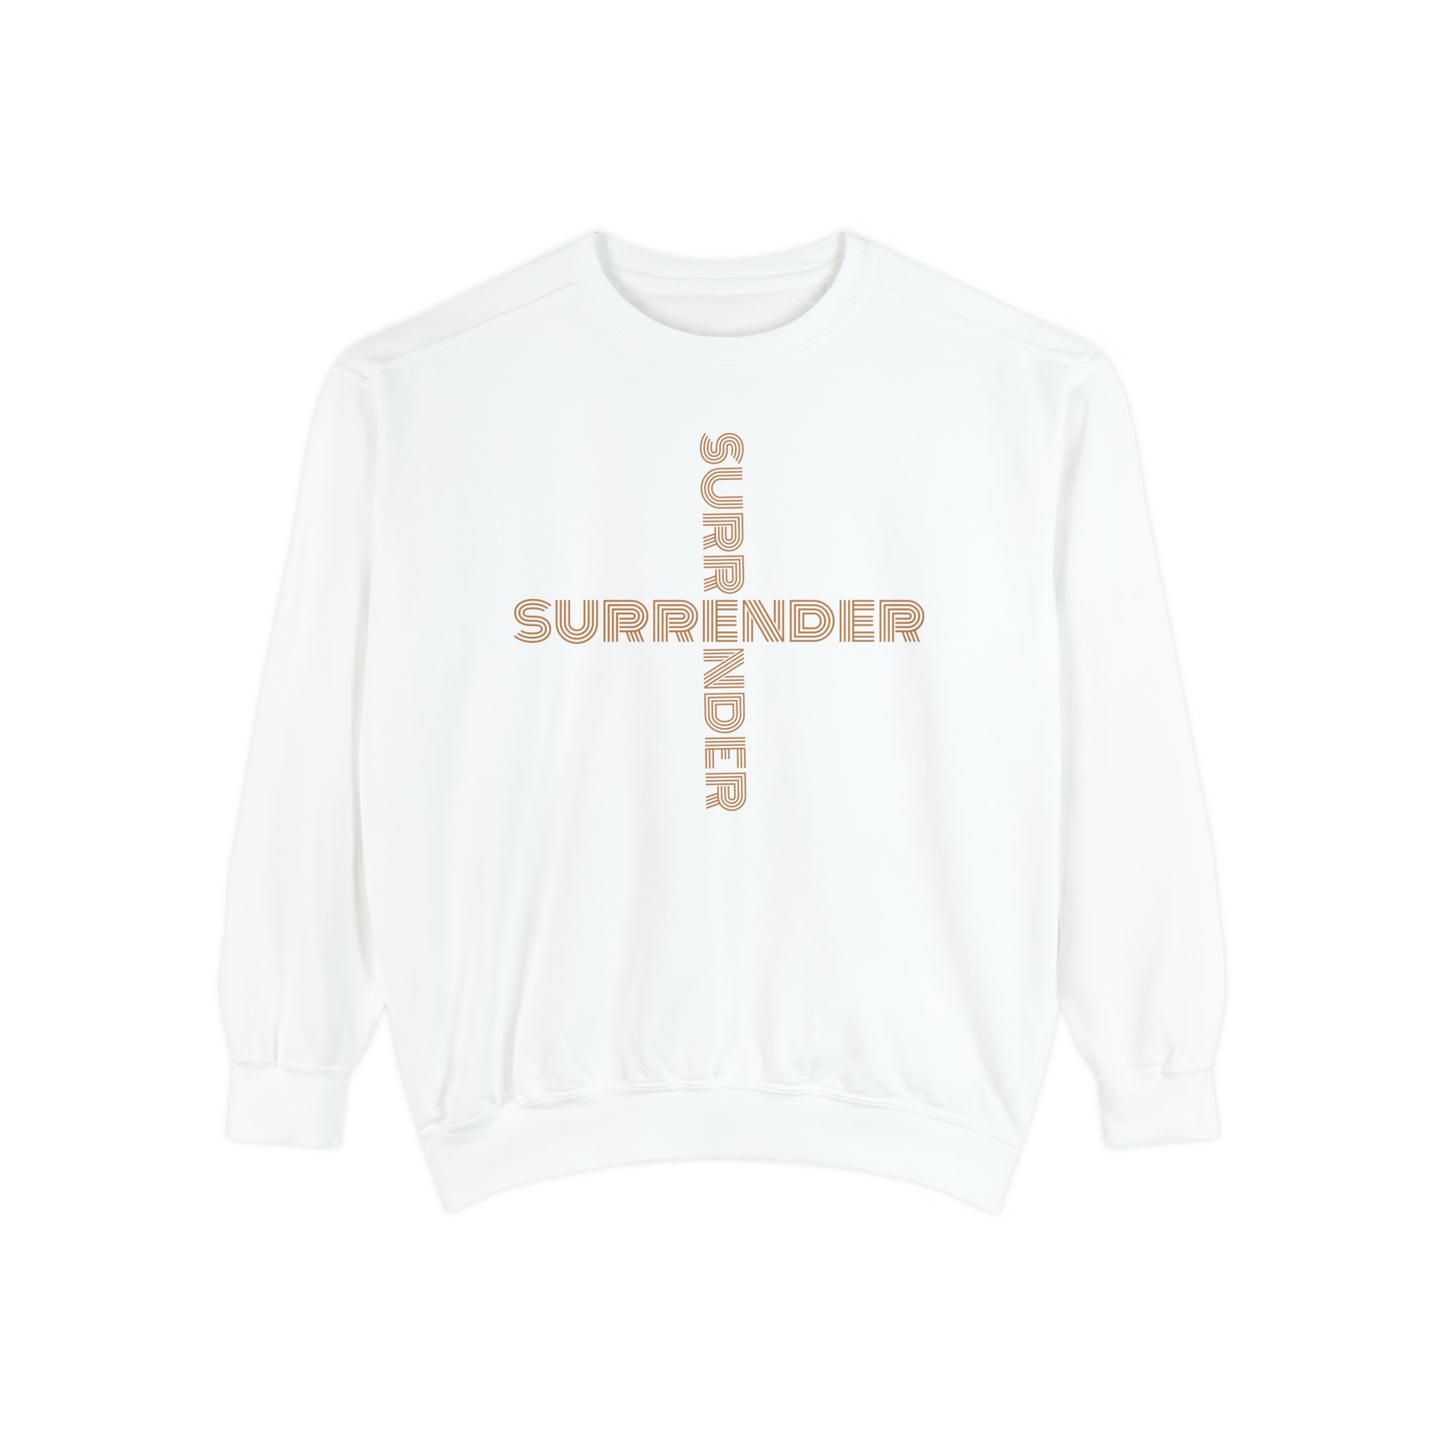 "CROSS + SURRENDER" Garment-Dyed Sweatshirt